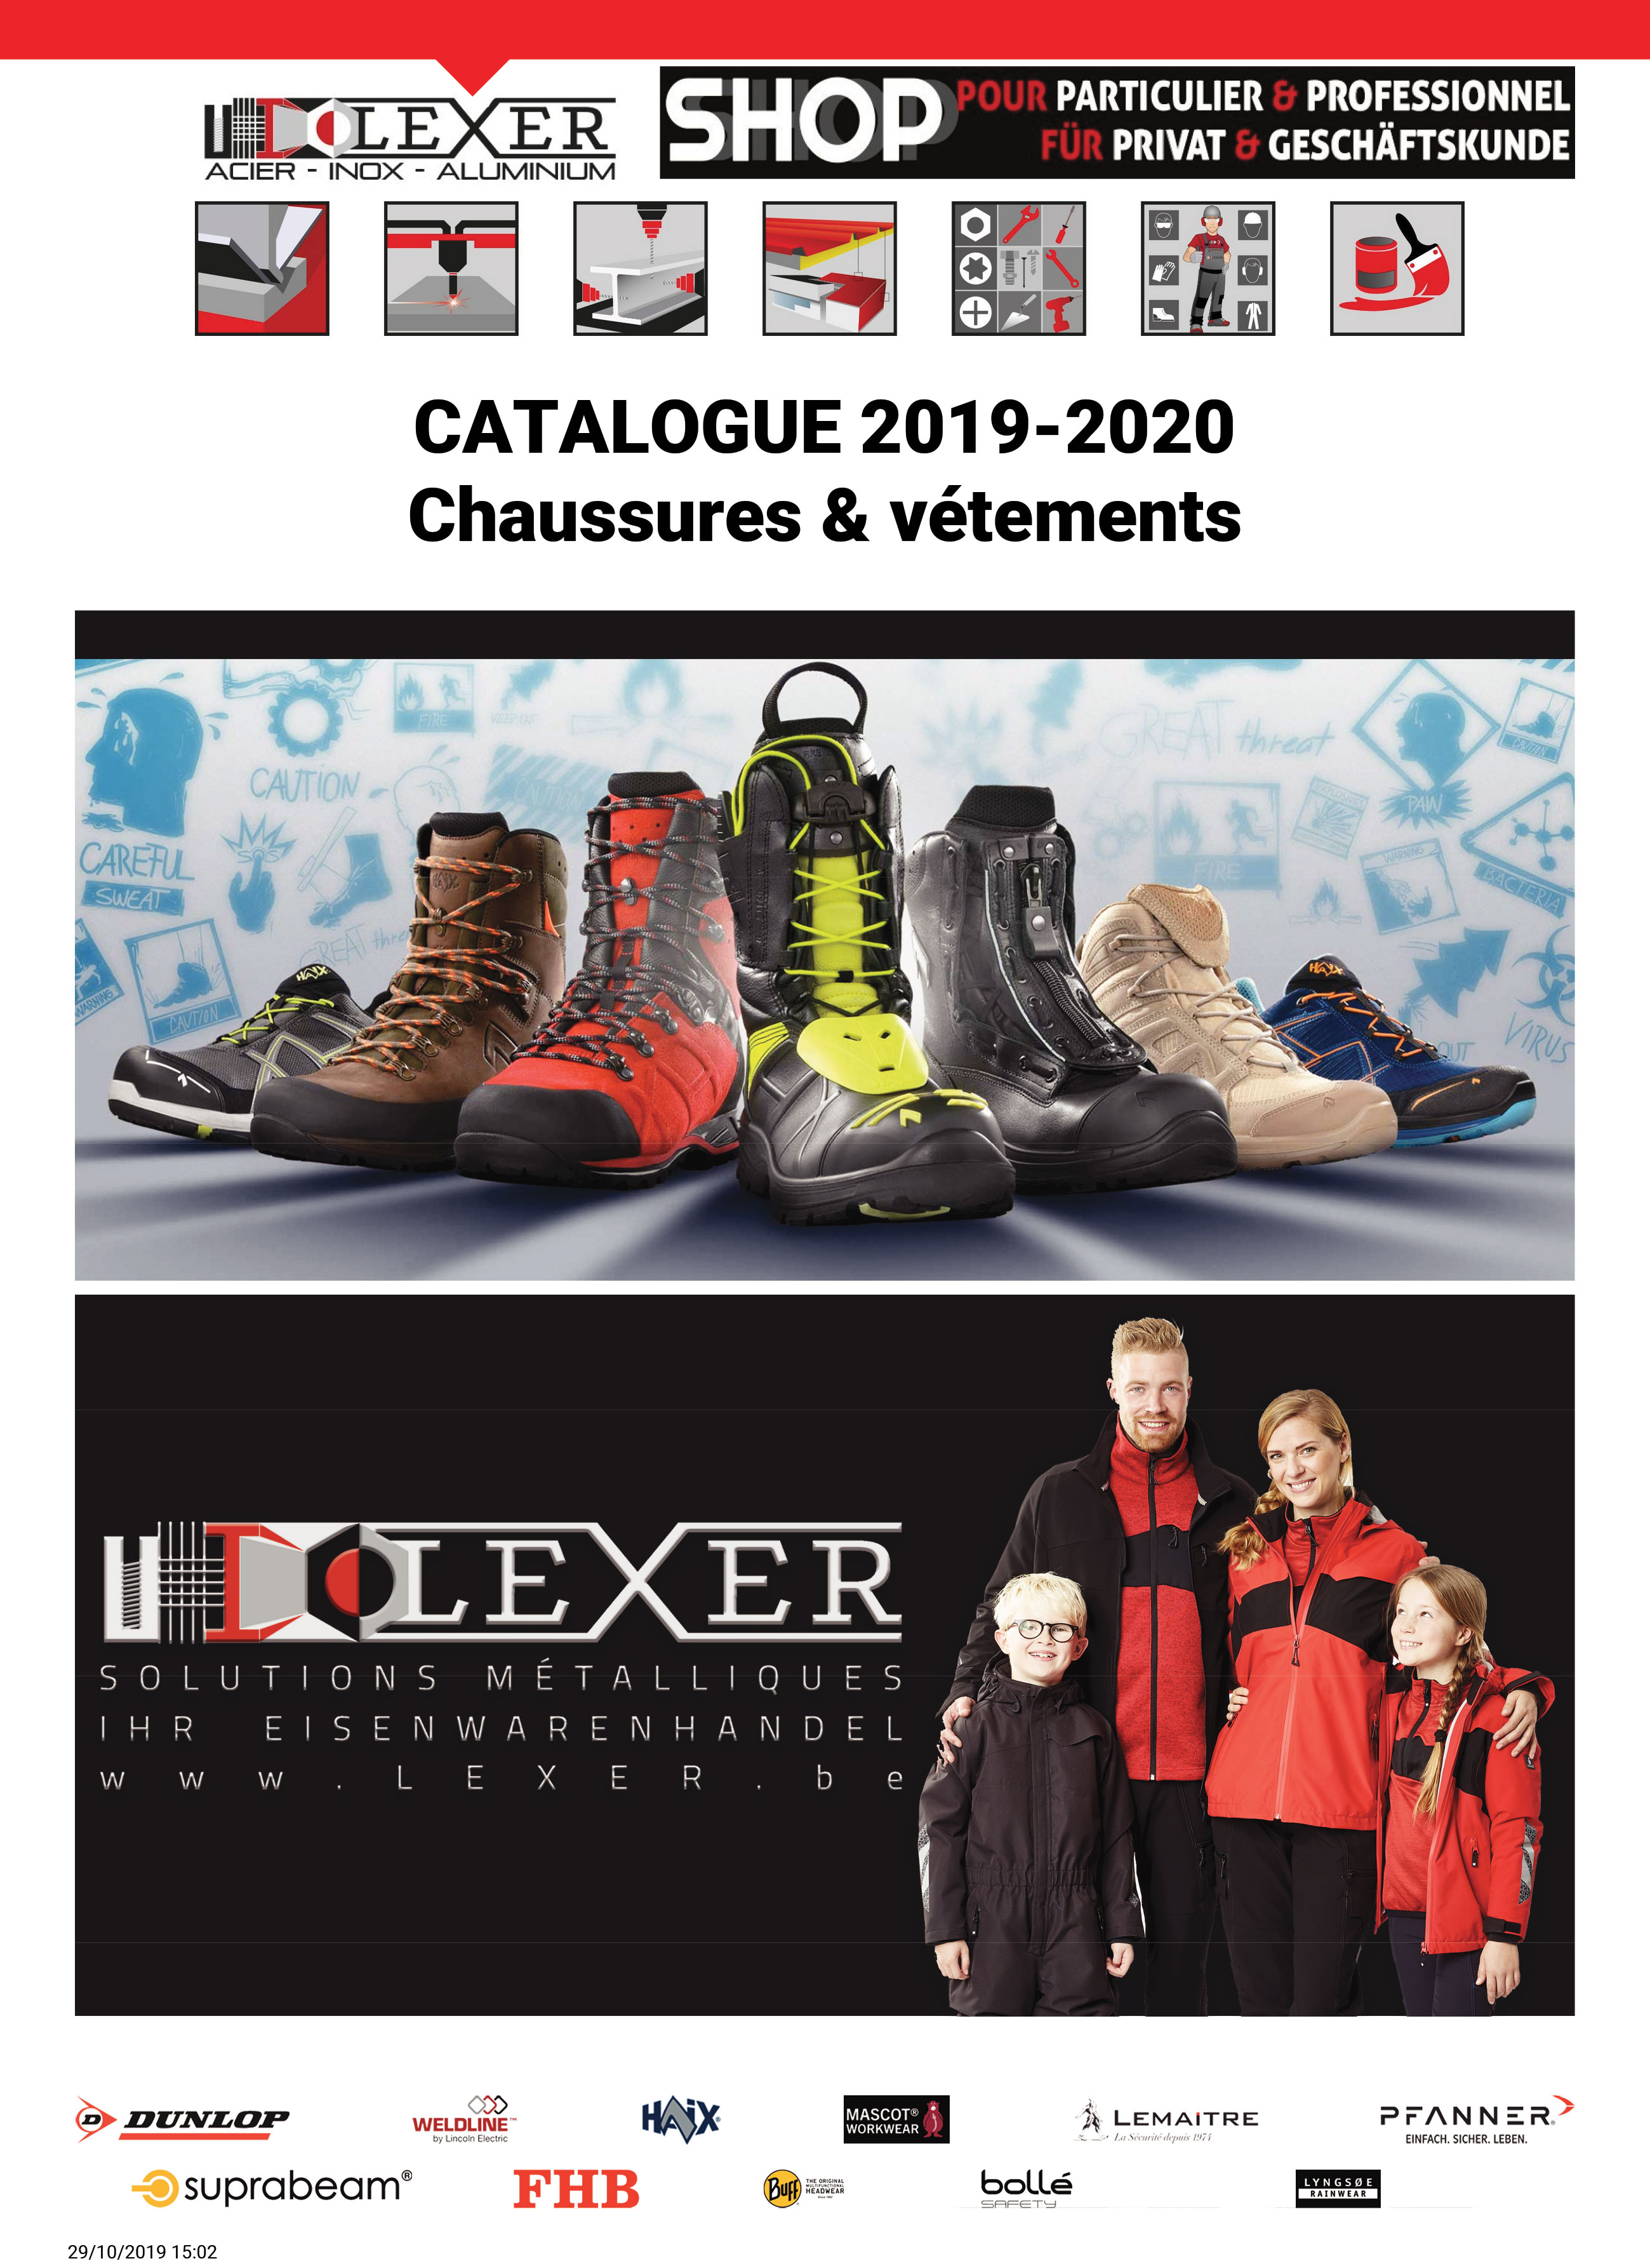 Lexer, catalogue, 2019-2020, chaussures, vetements